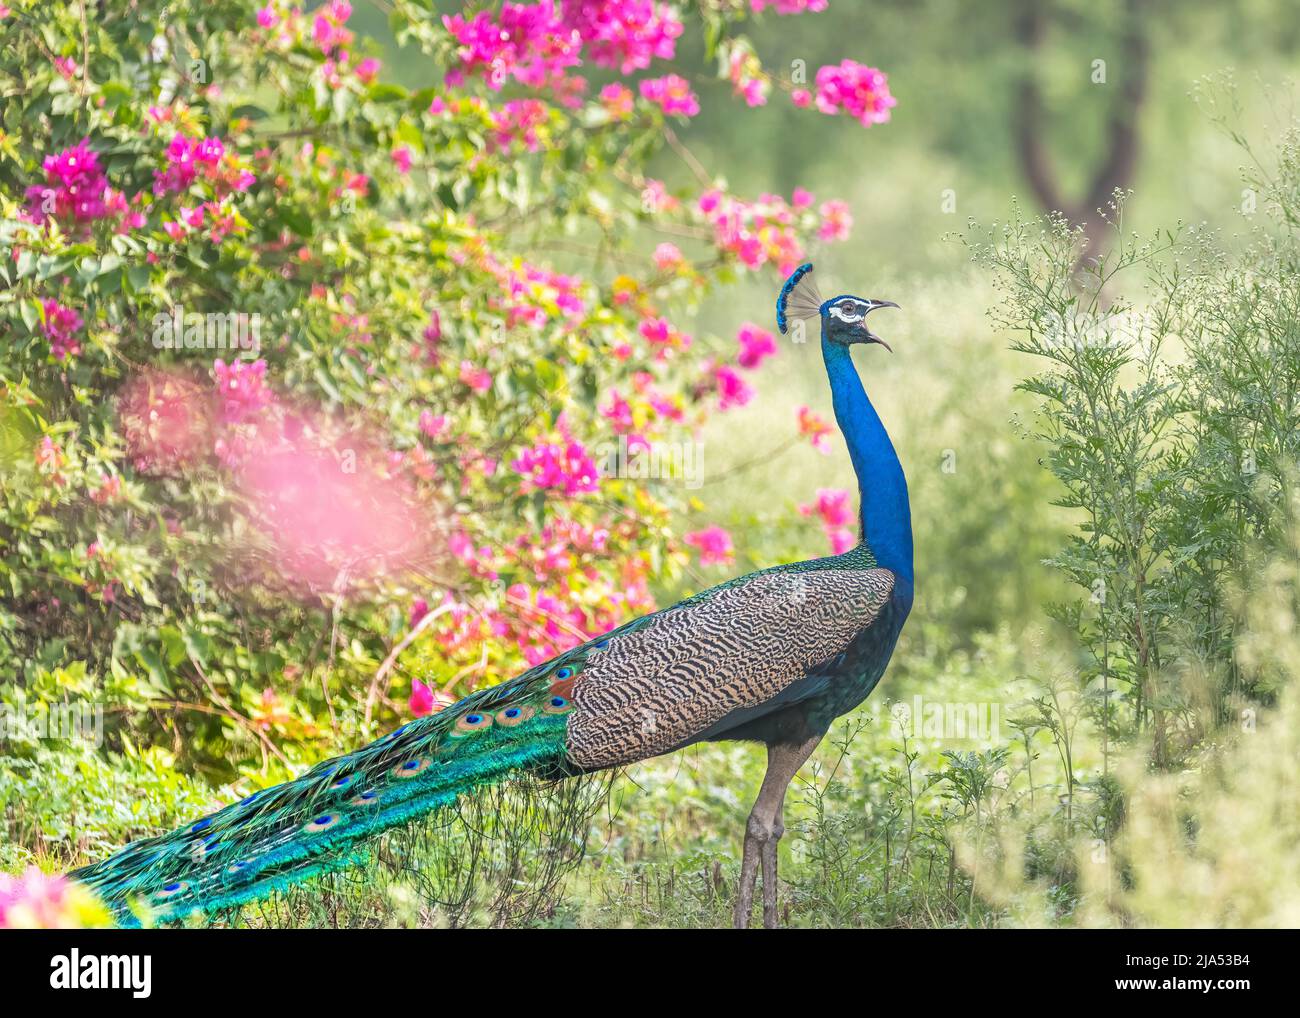 A Peacock making call for partner in garden Stock Photo